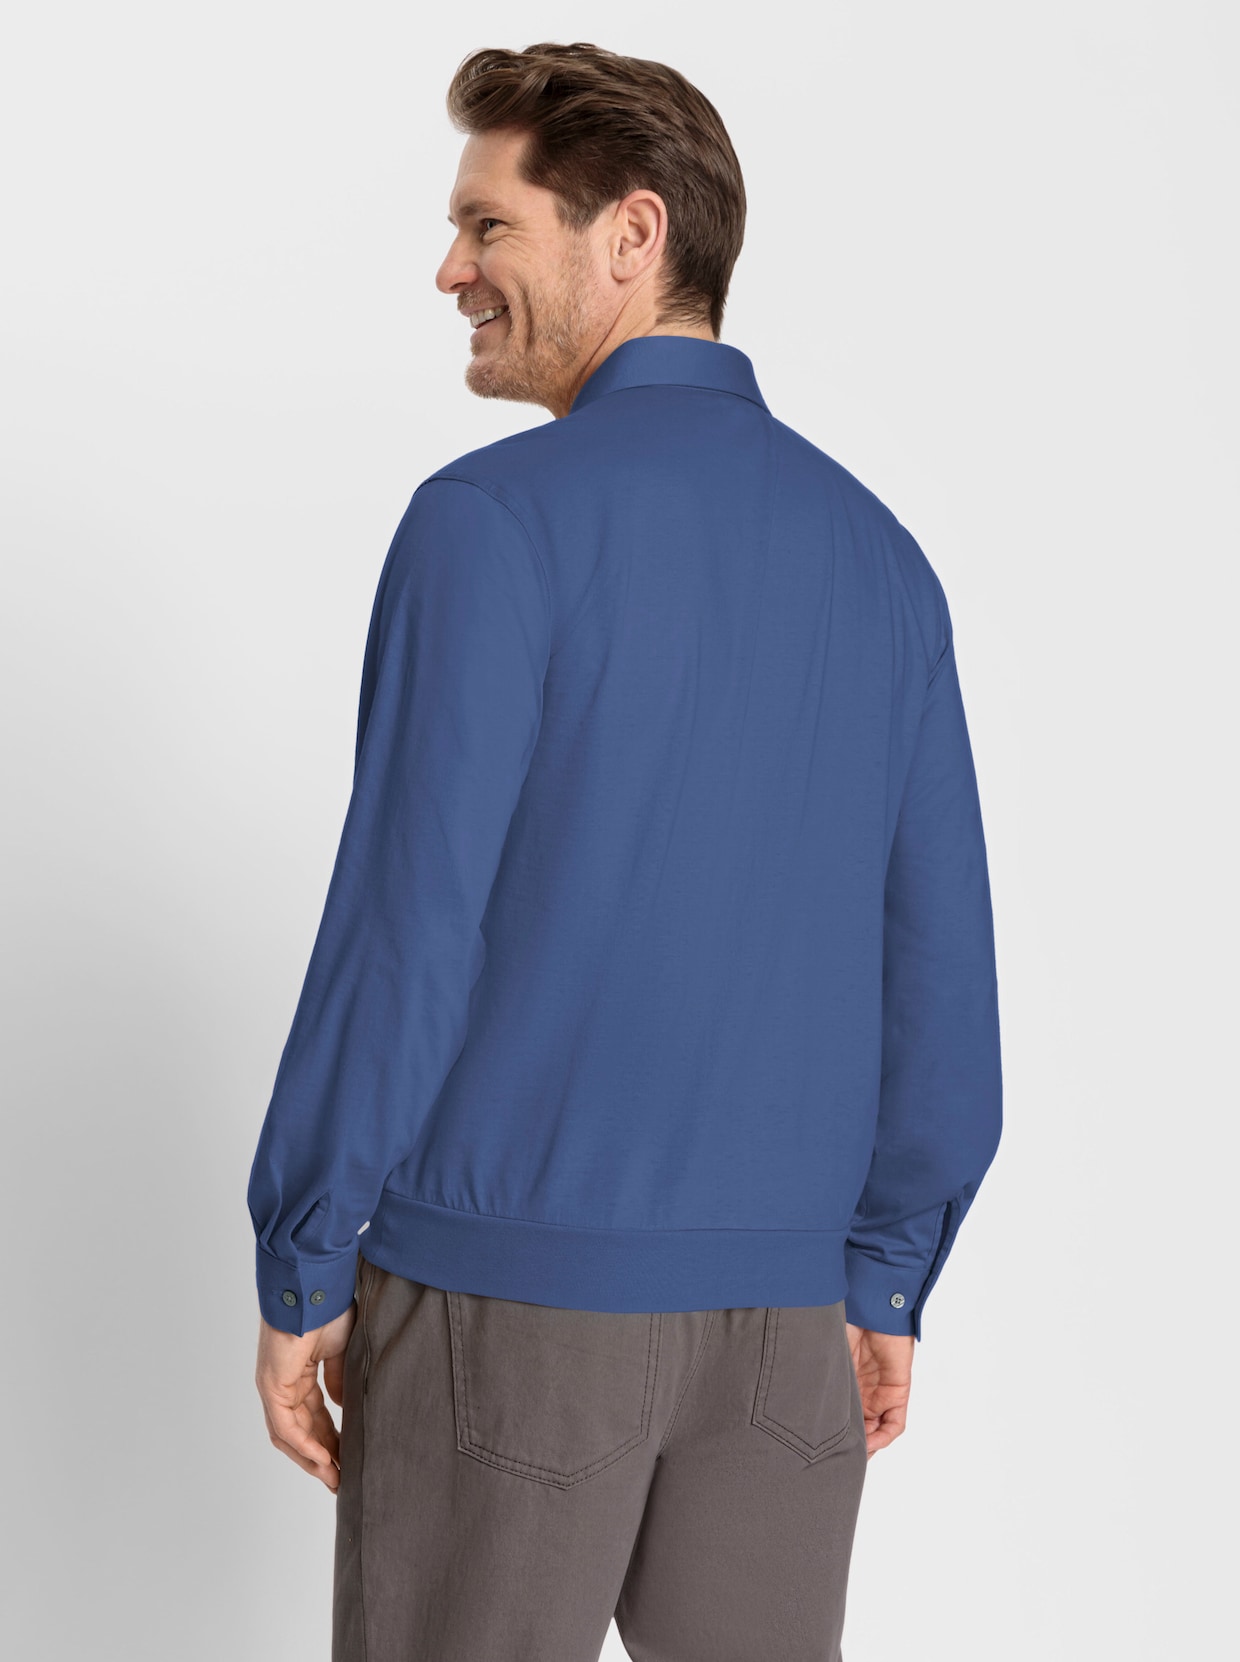 Langarm-Poloshirt - jeansblau